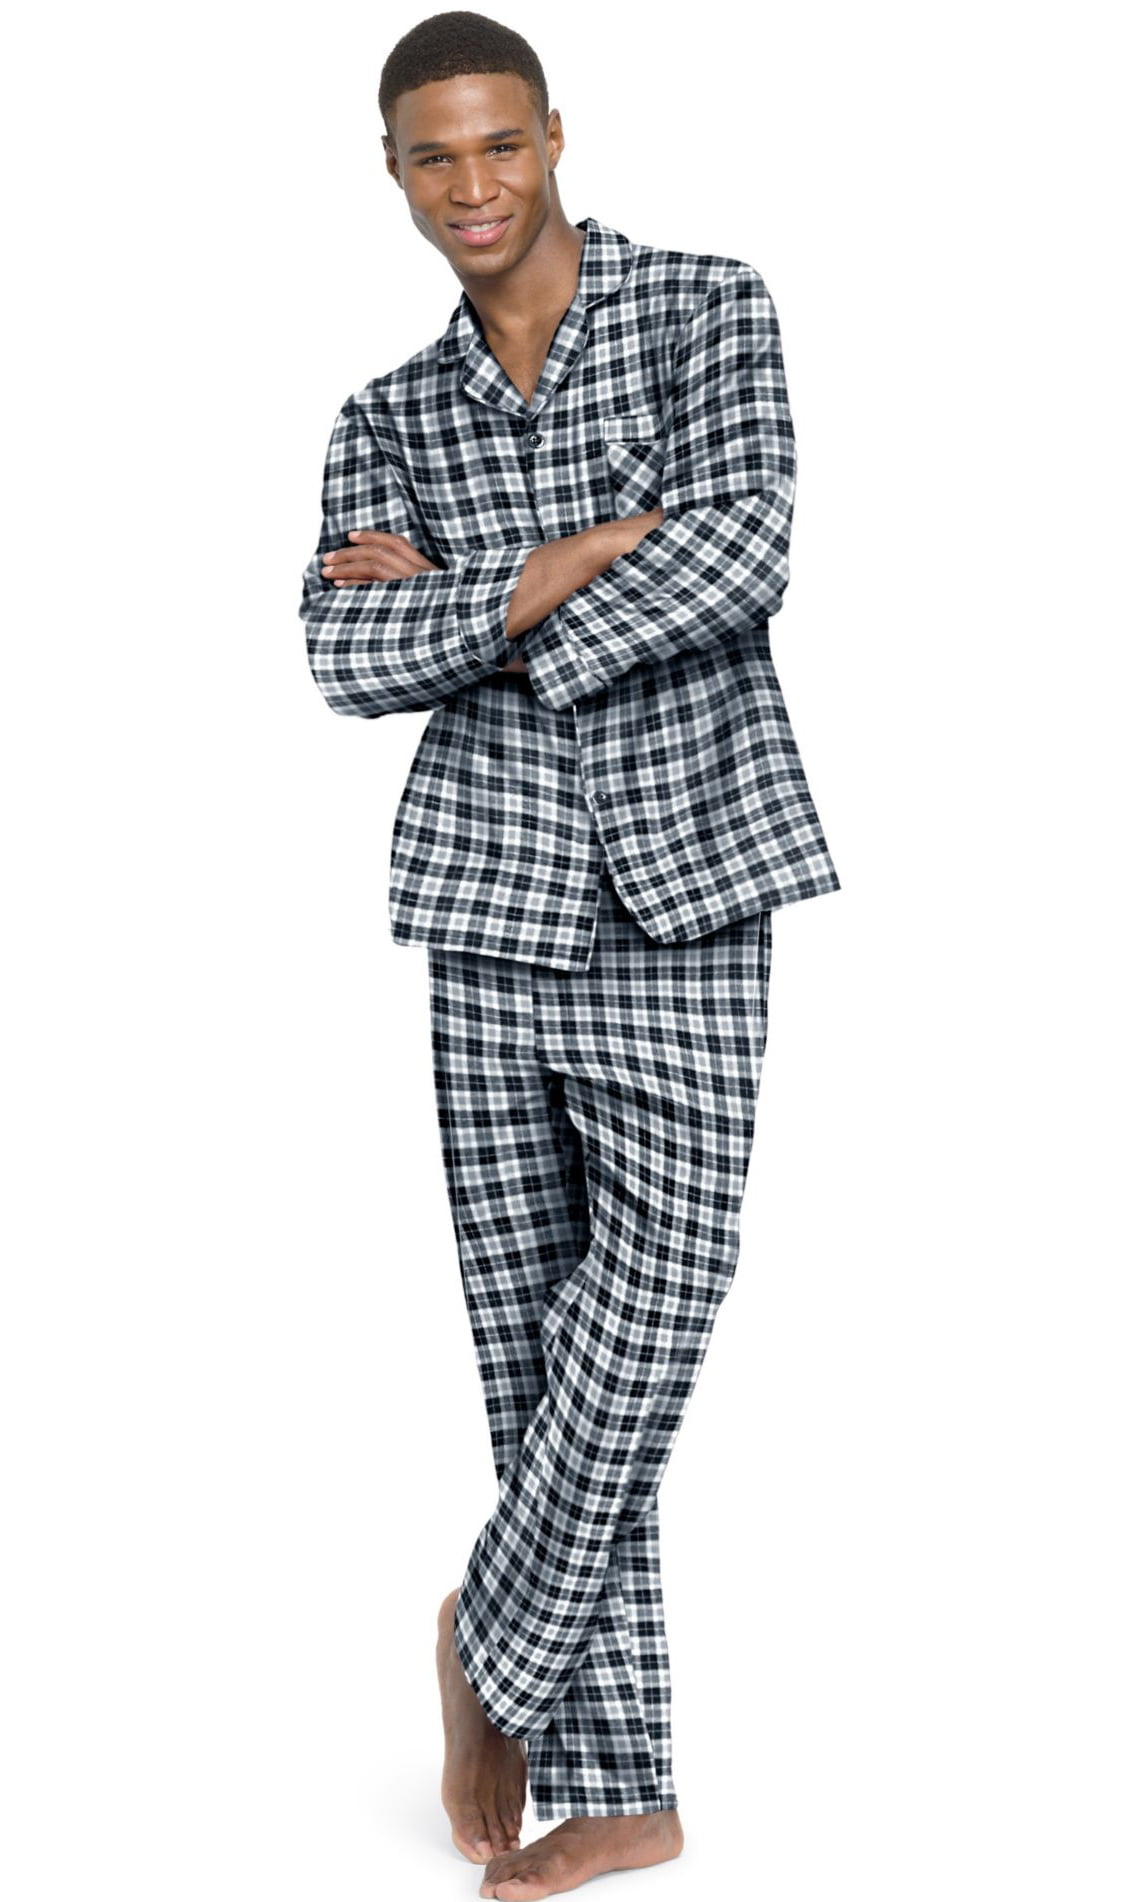 hanes-men-s-flannel-pajamas-0140-0140x-l-black-grey-plaid-walmart